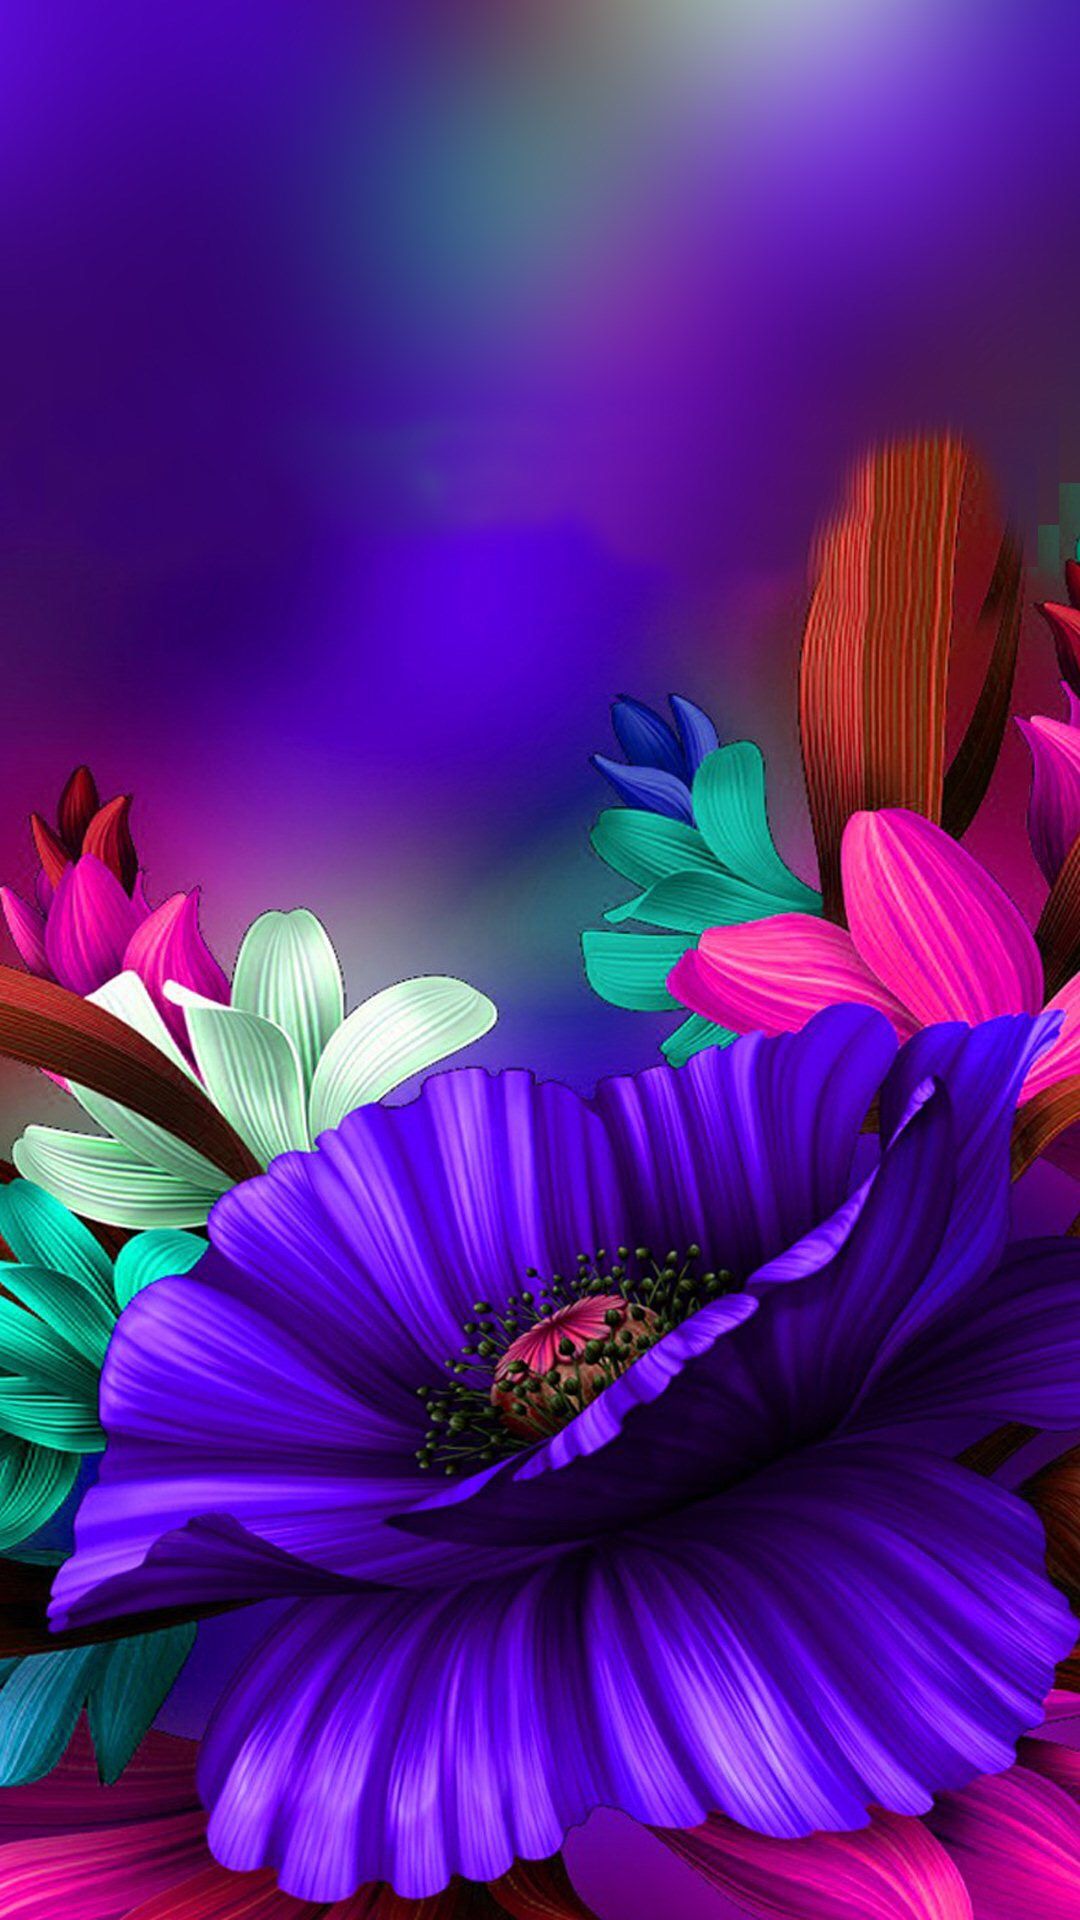 Wallpaper Beautiful bright colorful flowers! #flowers #purple #pink #bokeh #purpleflowers #pinkflowers #demerochell. Flower wallpaper, Flower painting, Flower art